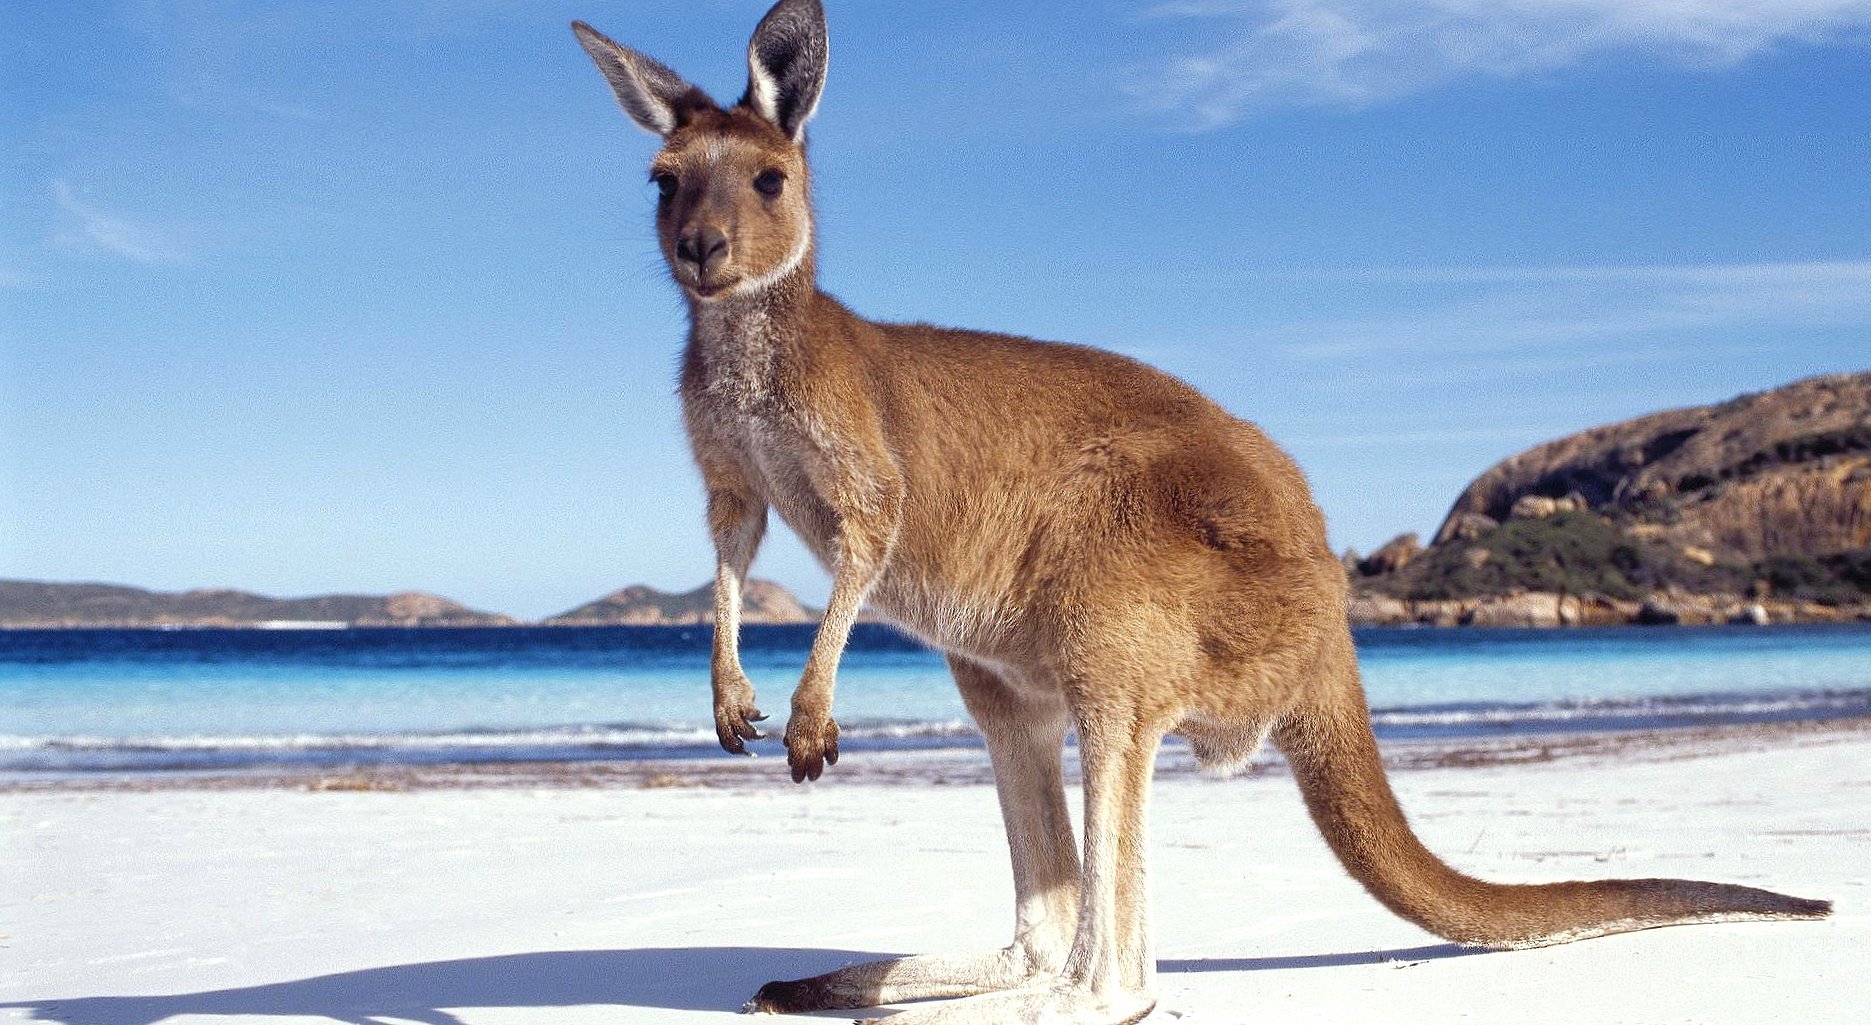 Beach kangaroo at 2048 x 2048 iPad size wallpapers HD quality